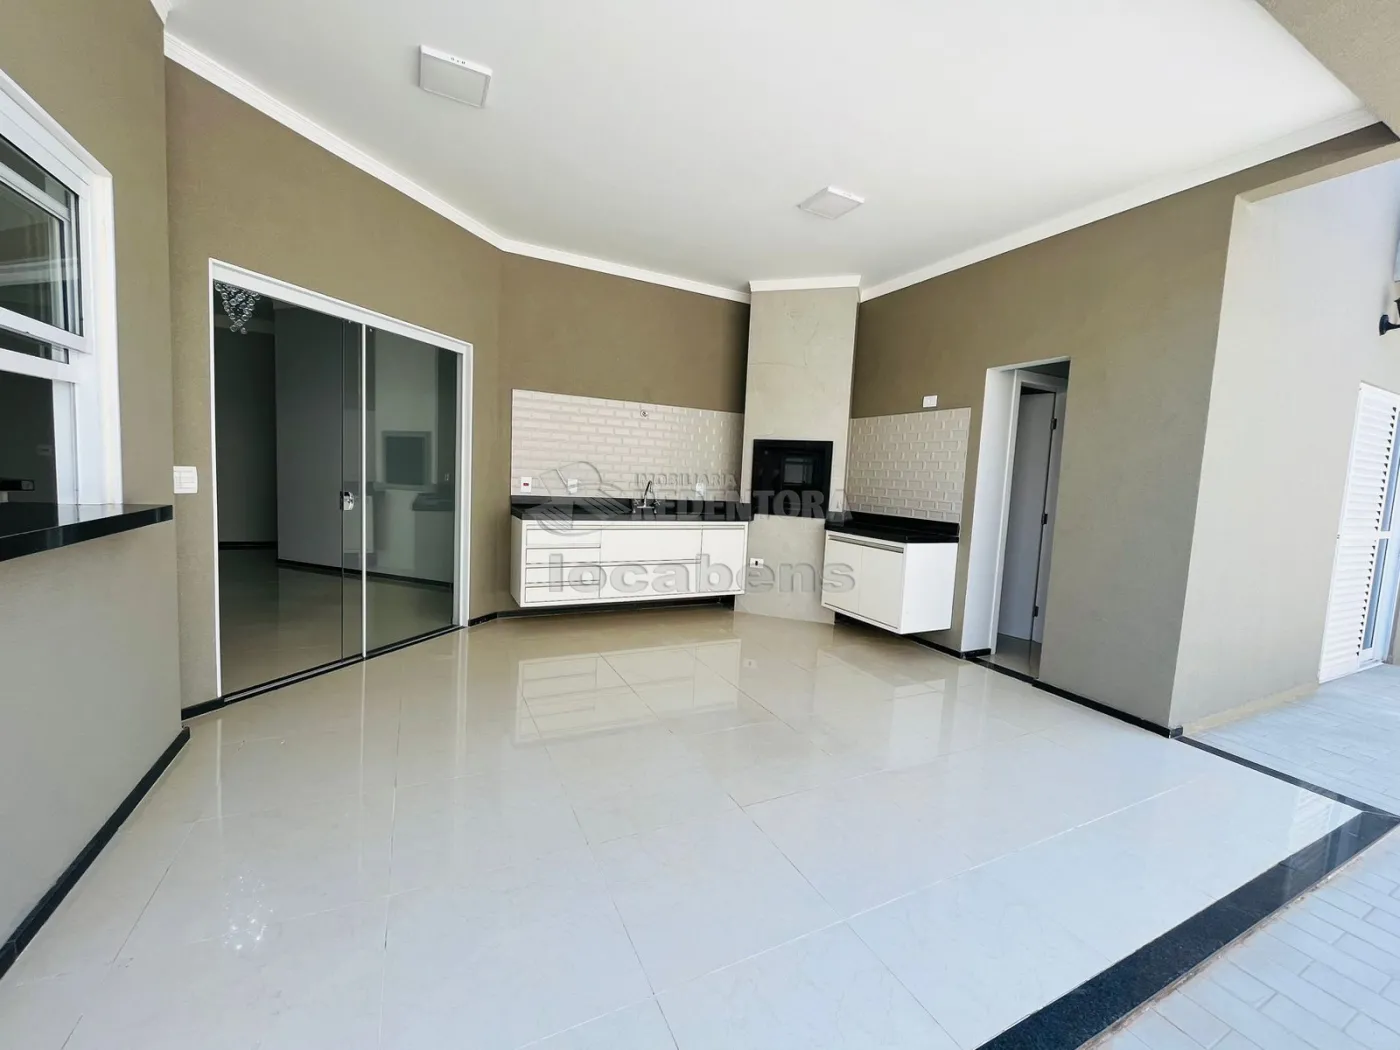 Comprar Casa / Condomínio em Mirassol R$ 860.000,00 - Foto 6